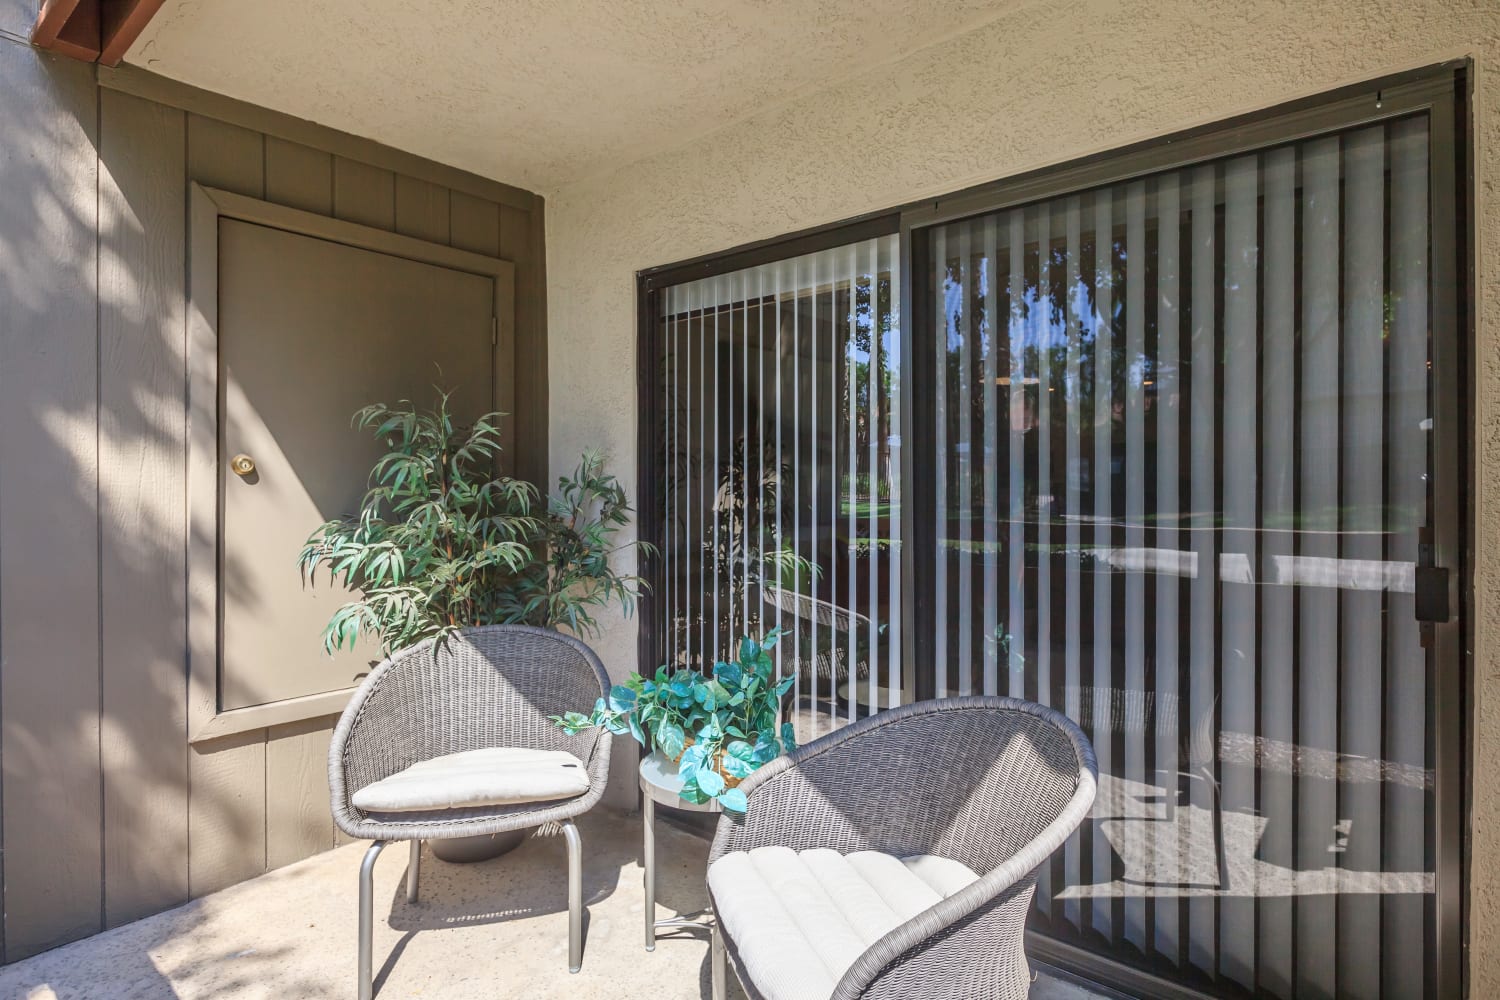 Sunny private patio at Parcwood Apartments in Corona, California